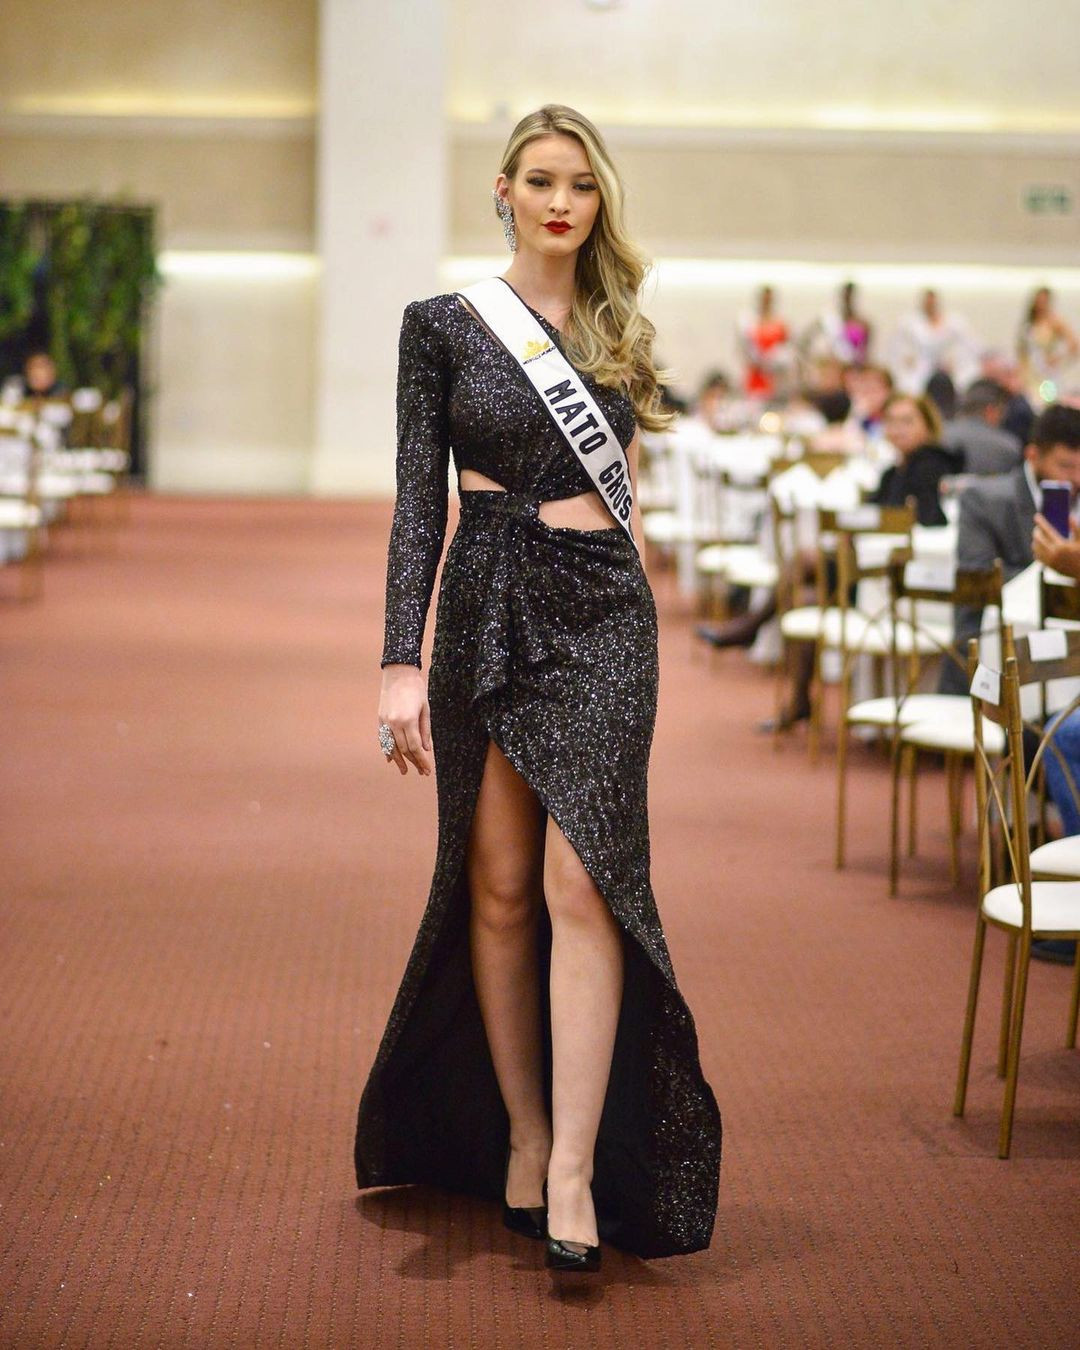 larissa neiverth, top 20 de miss brasil mundo 2019. - Página 7 Qgvlun10